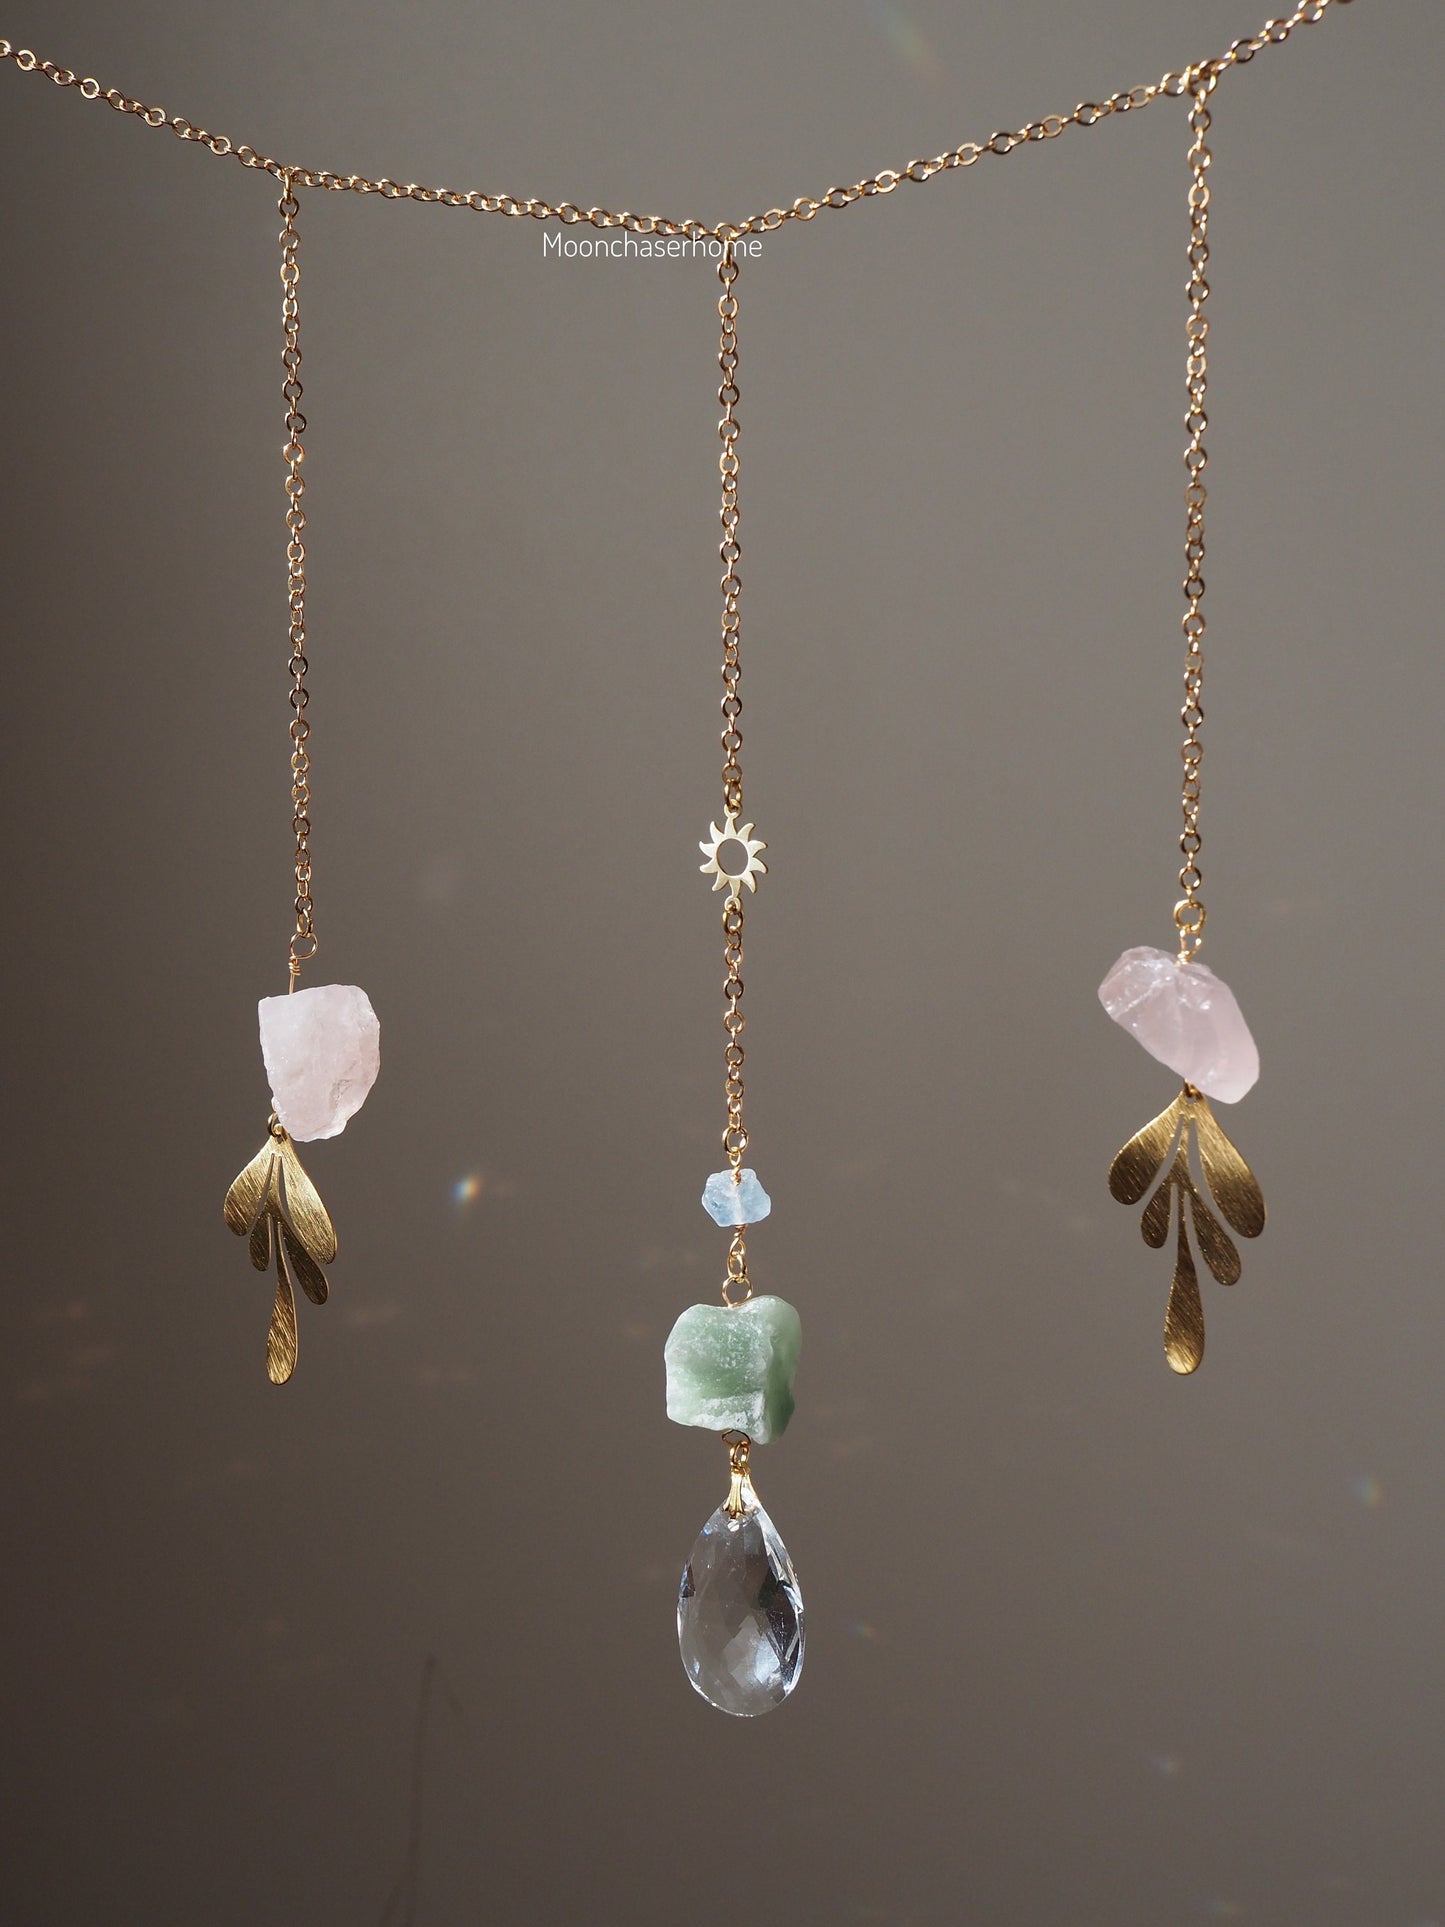 Shani- crystal garland suncatcher, wall hanging crystal, window chain home decor healing crystals decor